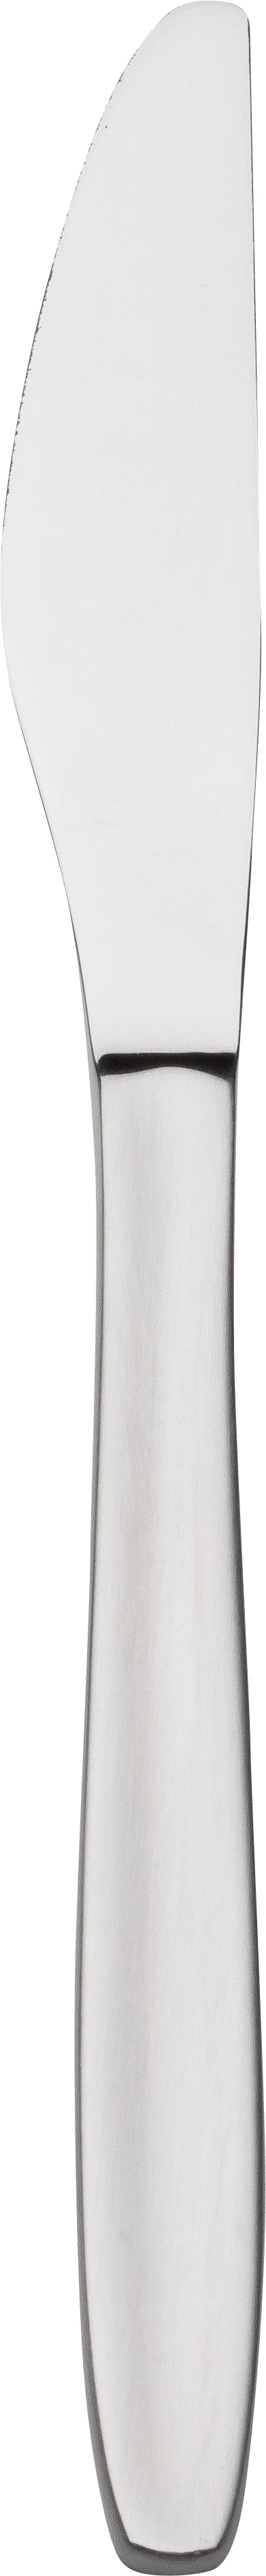 Haag bordkniv, 20,5 cm